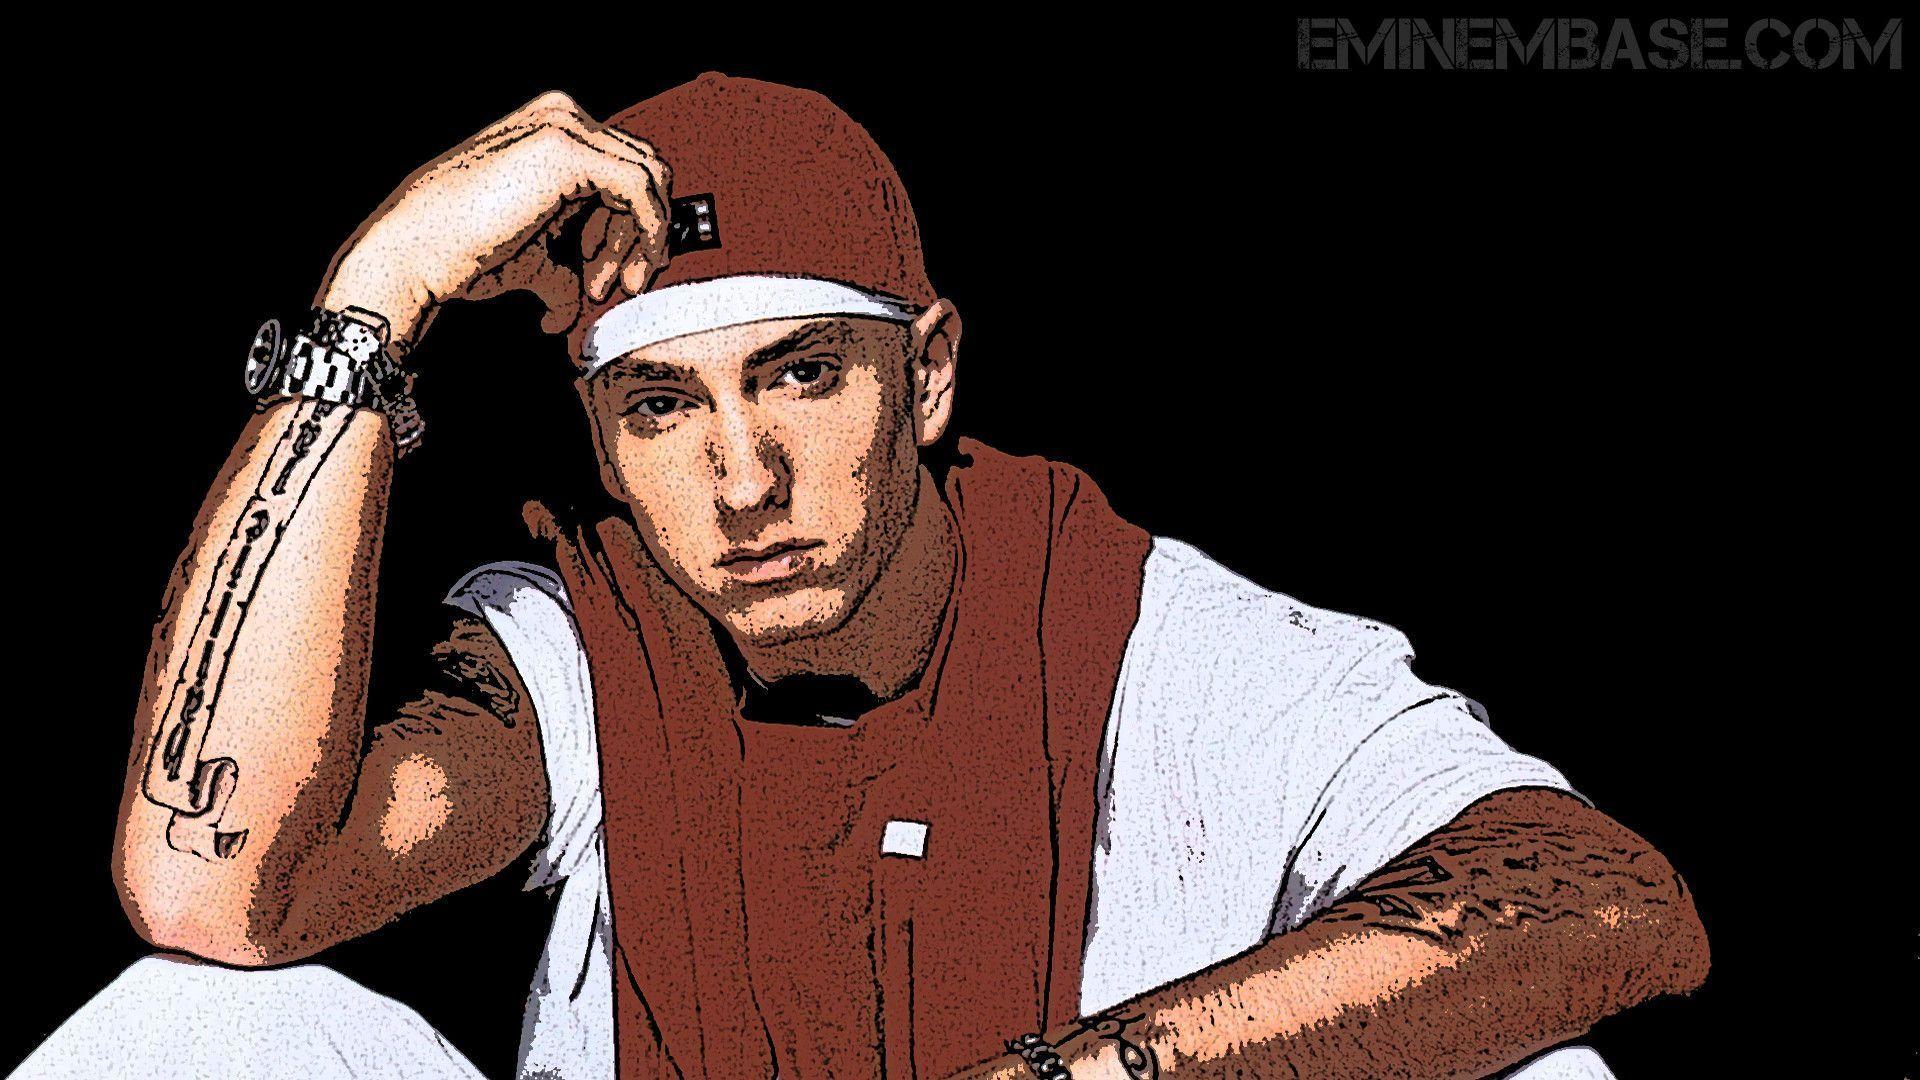 Free Eminem Wallpaper 1920x1080. Hot HD Wallpaper